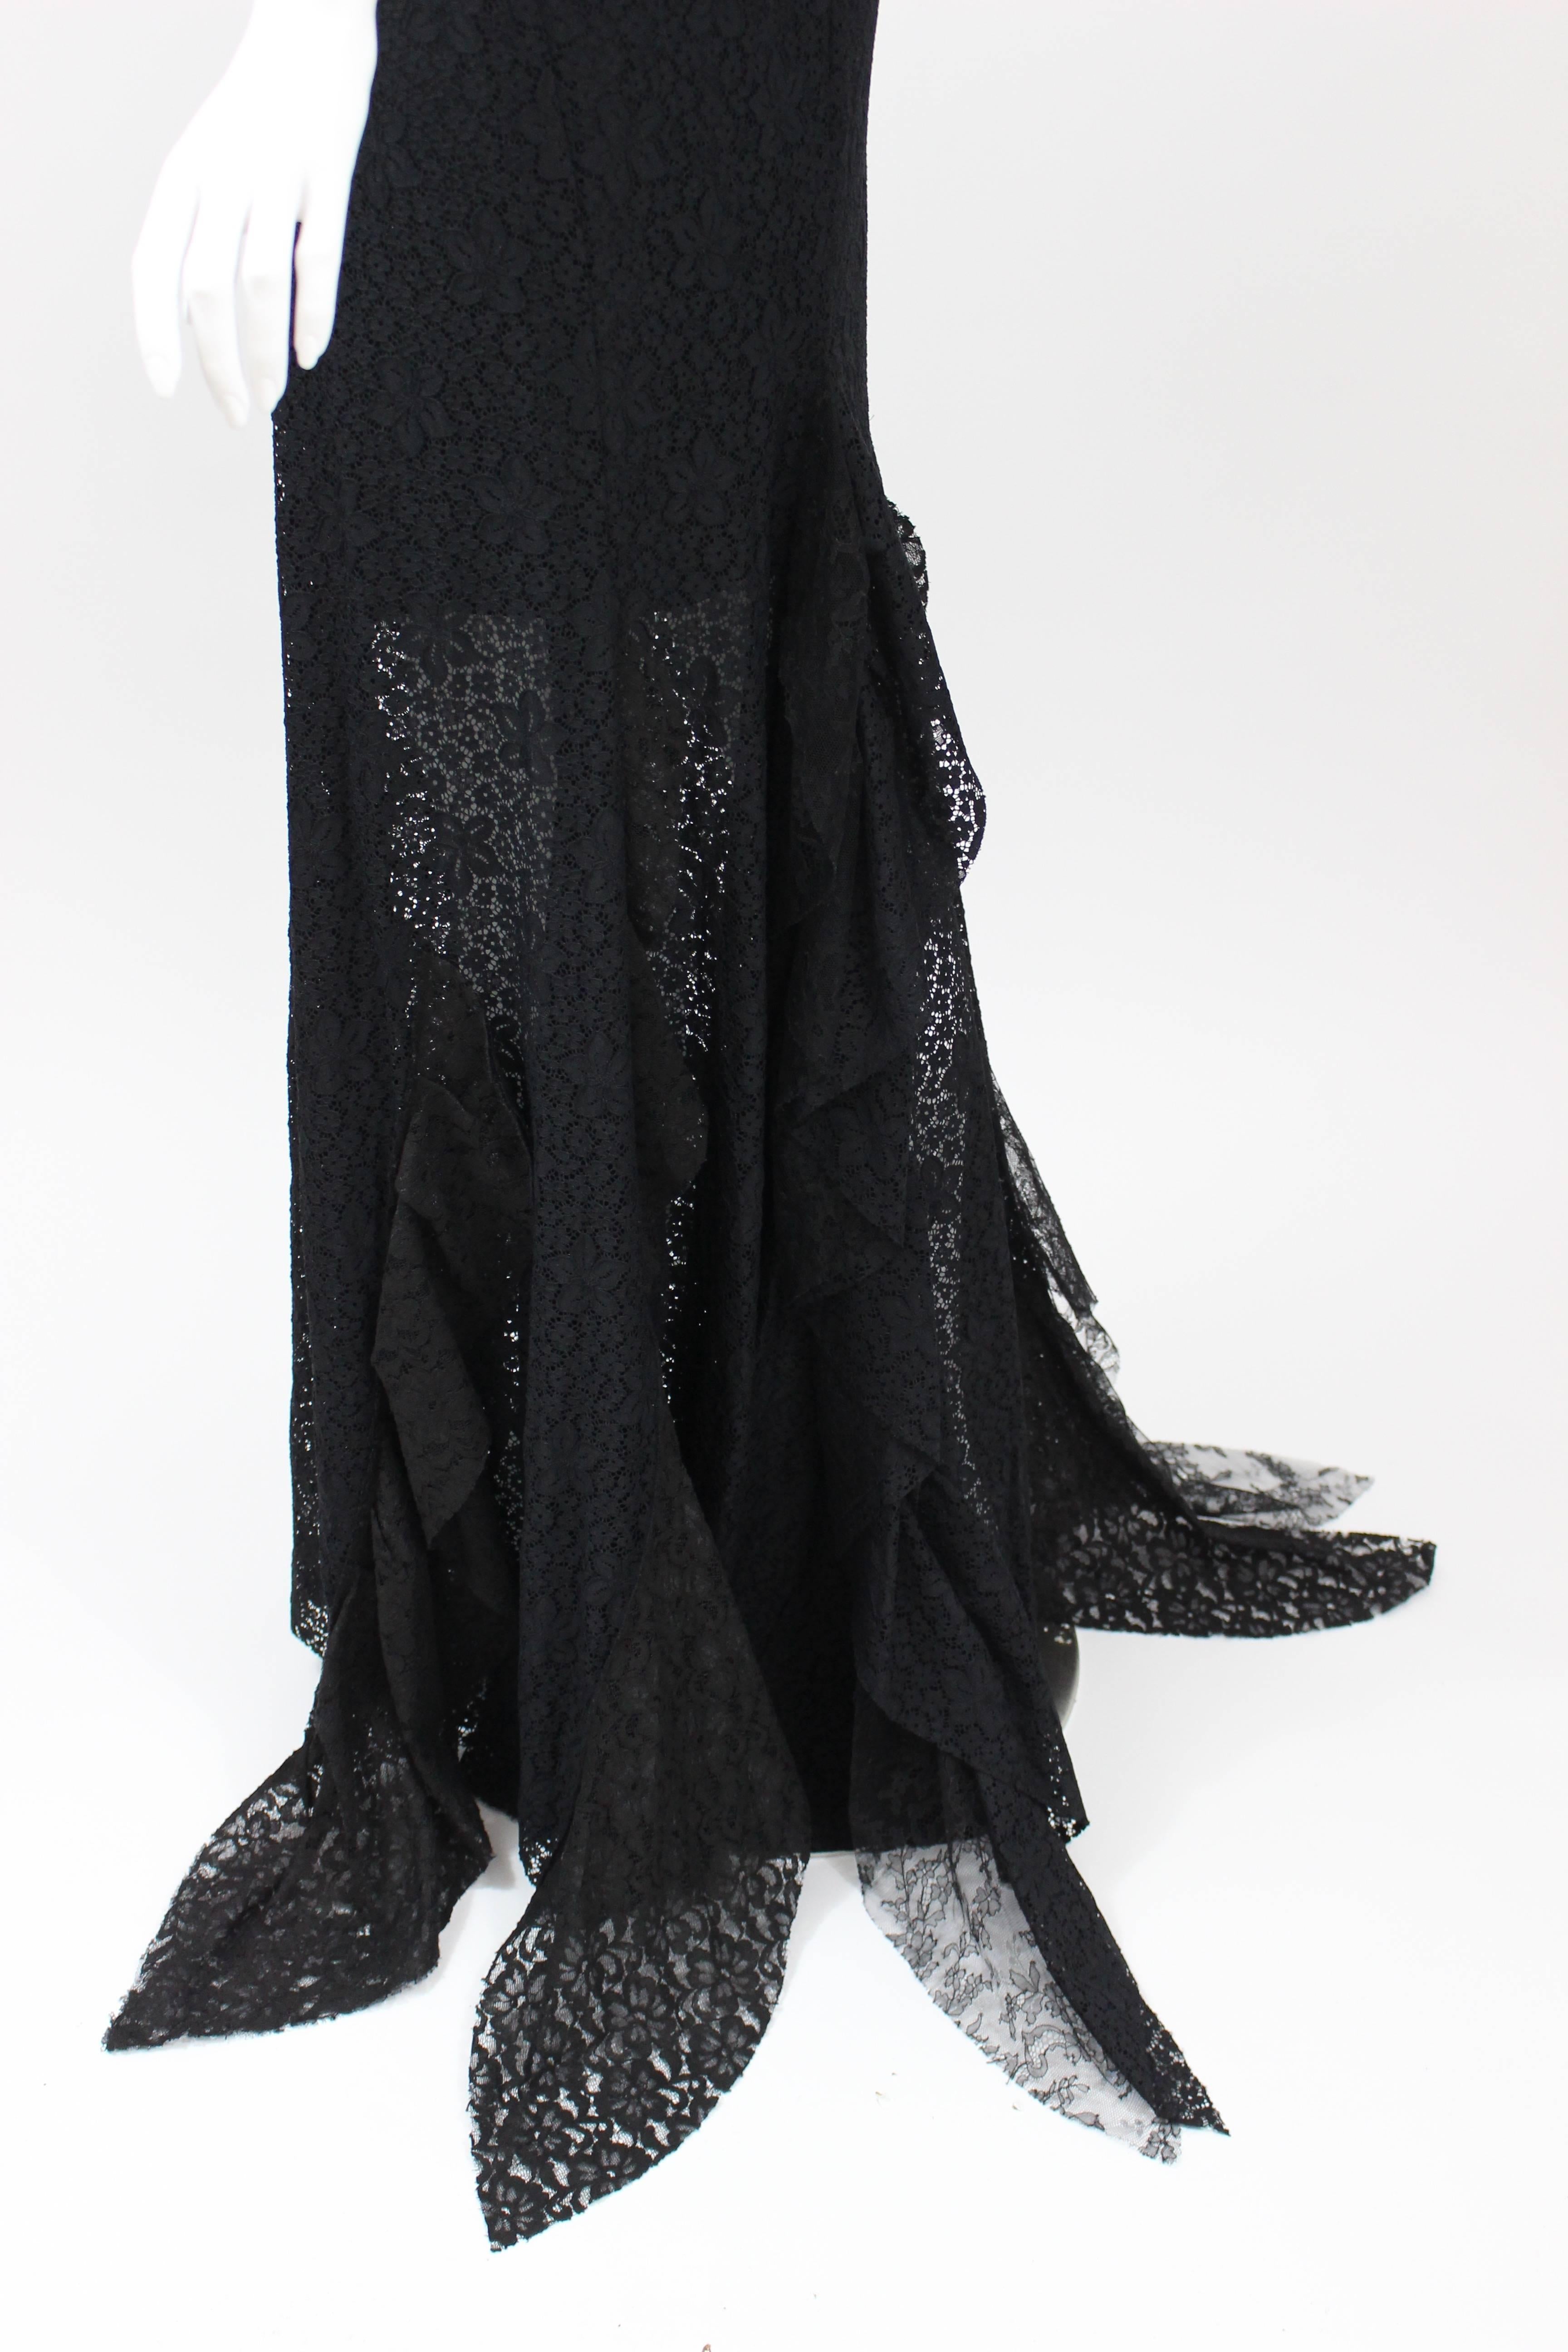 Women's Nina Ricci Black Lace Ruffles Fishtail Evening Gown, 2013  